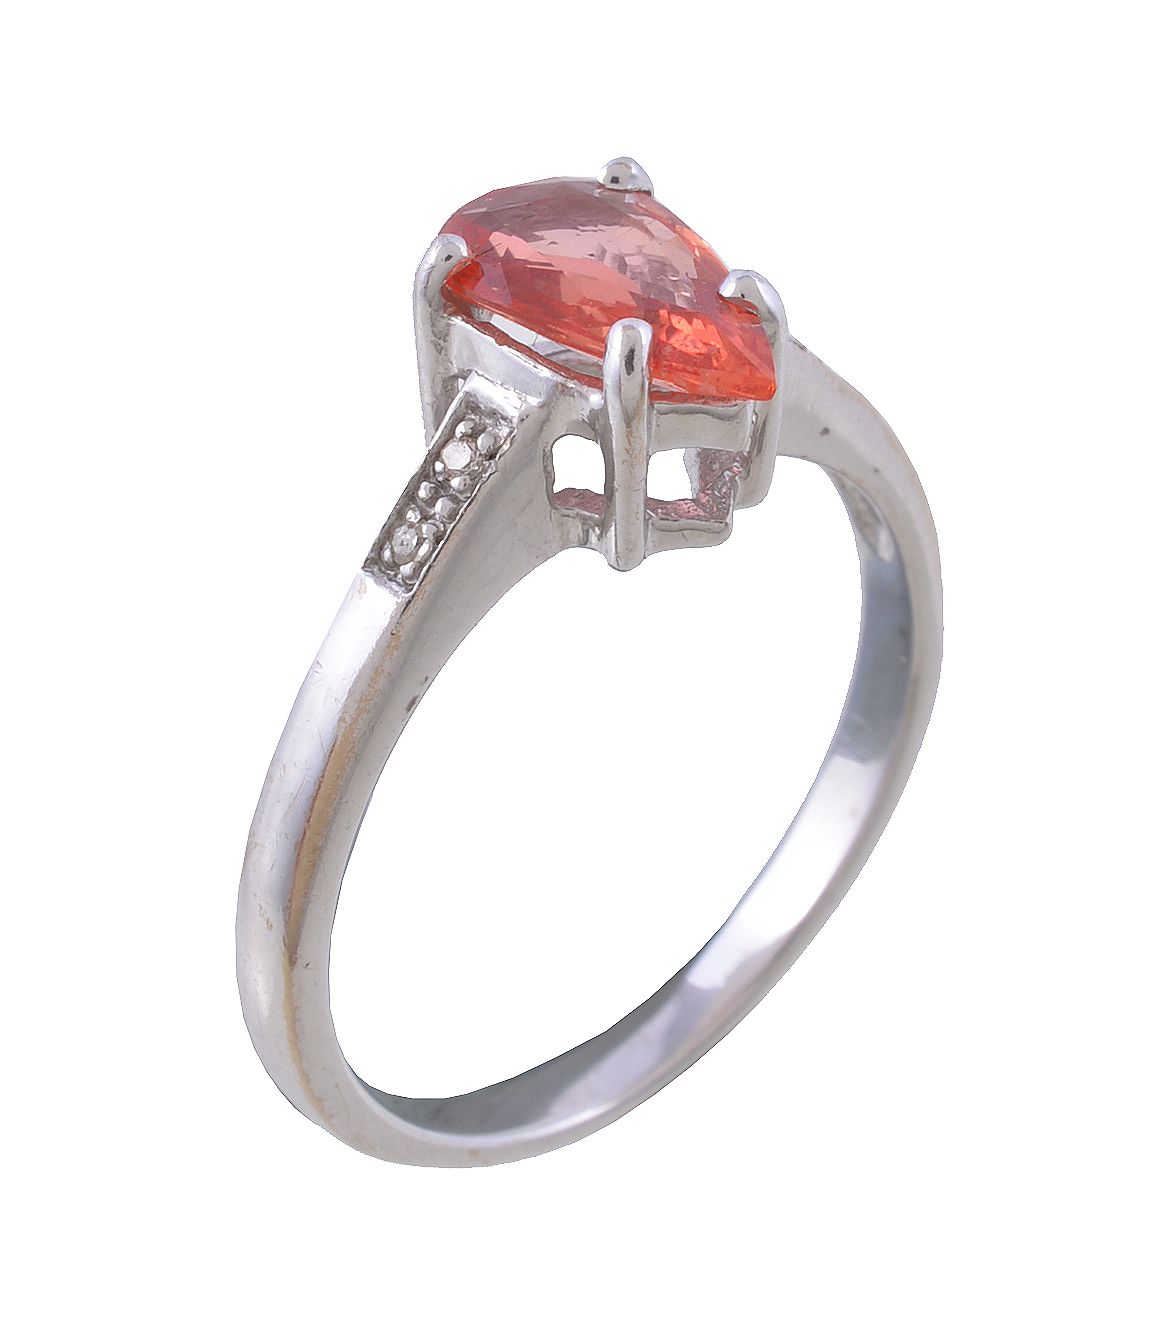 An 18 carat gold orange sapphire and diamond ring, the pear cut orange sapphire claw set between